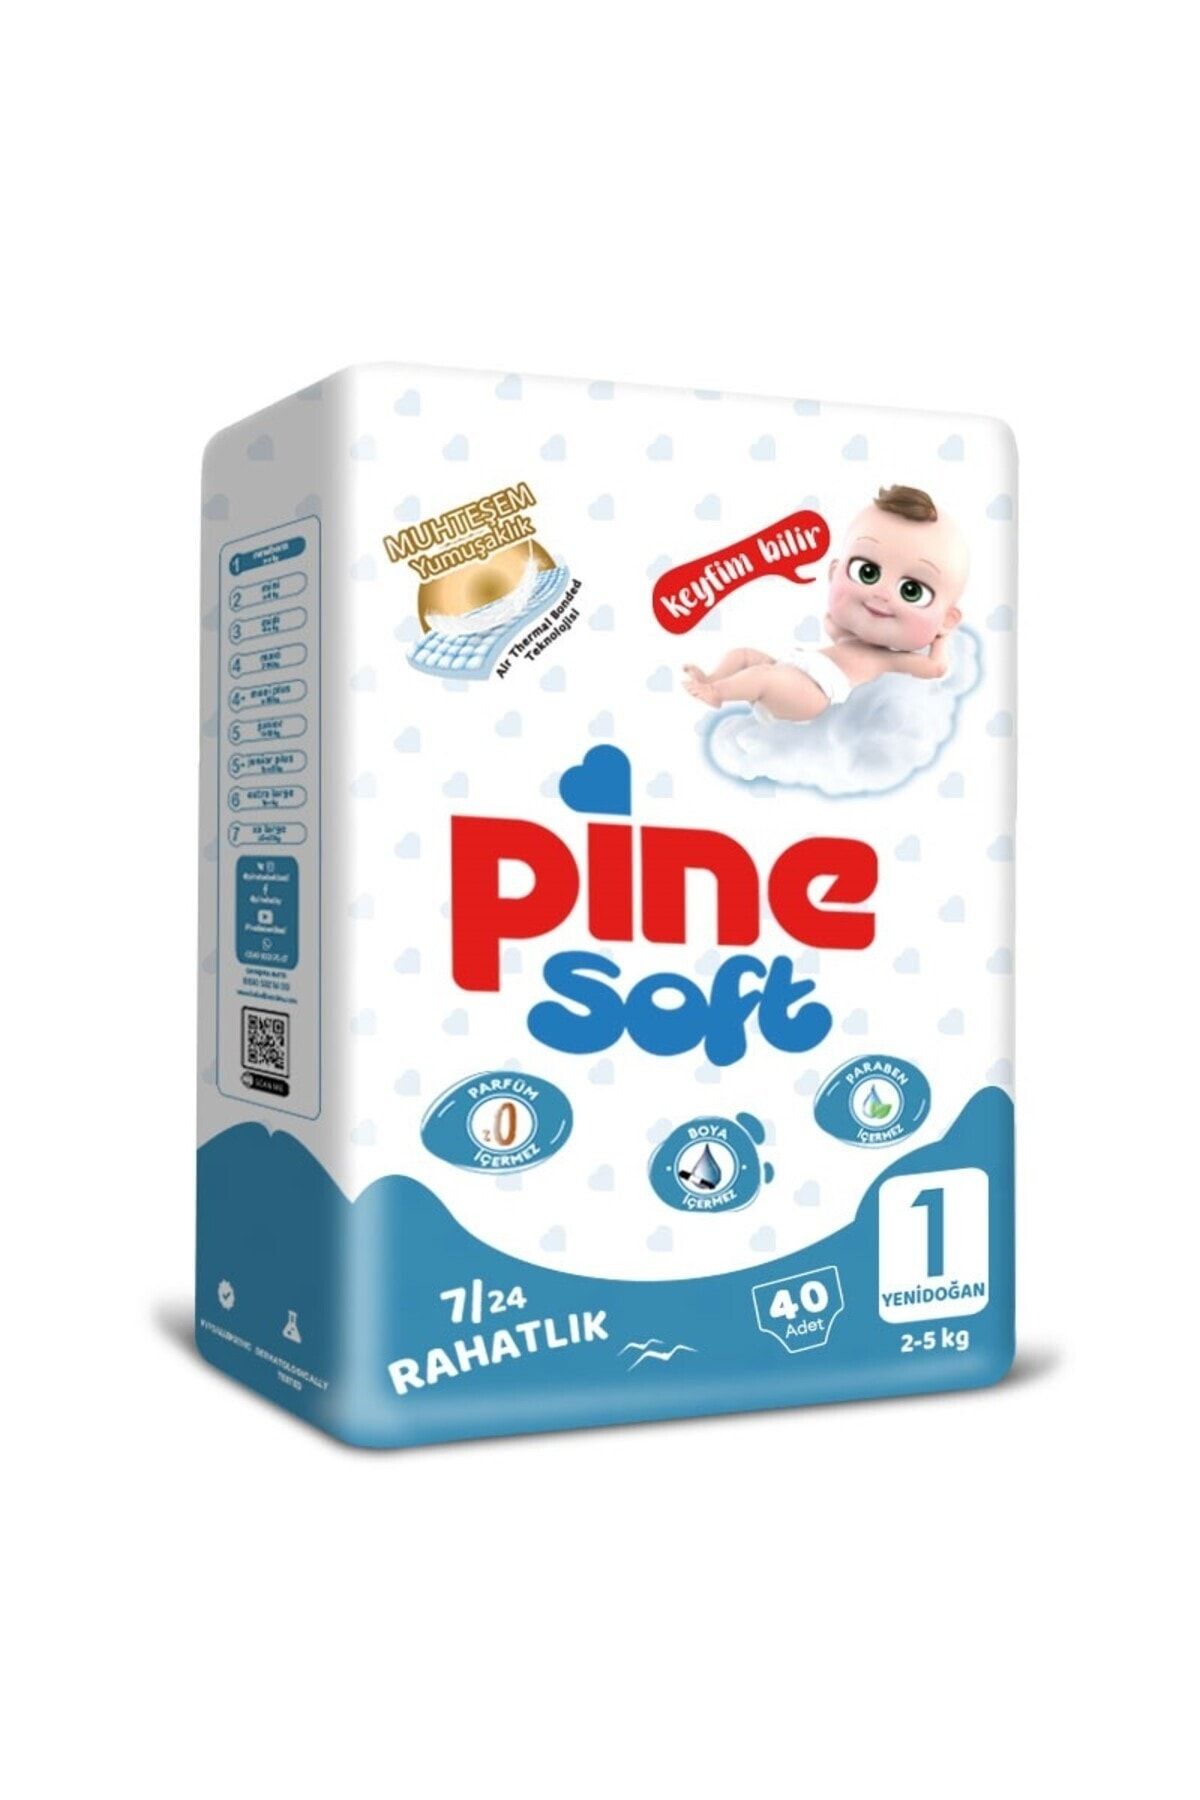 Pine Soft Yenidoğan (2-5 kg) 40 Adet Ekonomik Paket Bebek Bezi